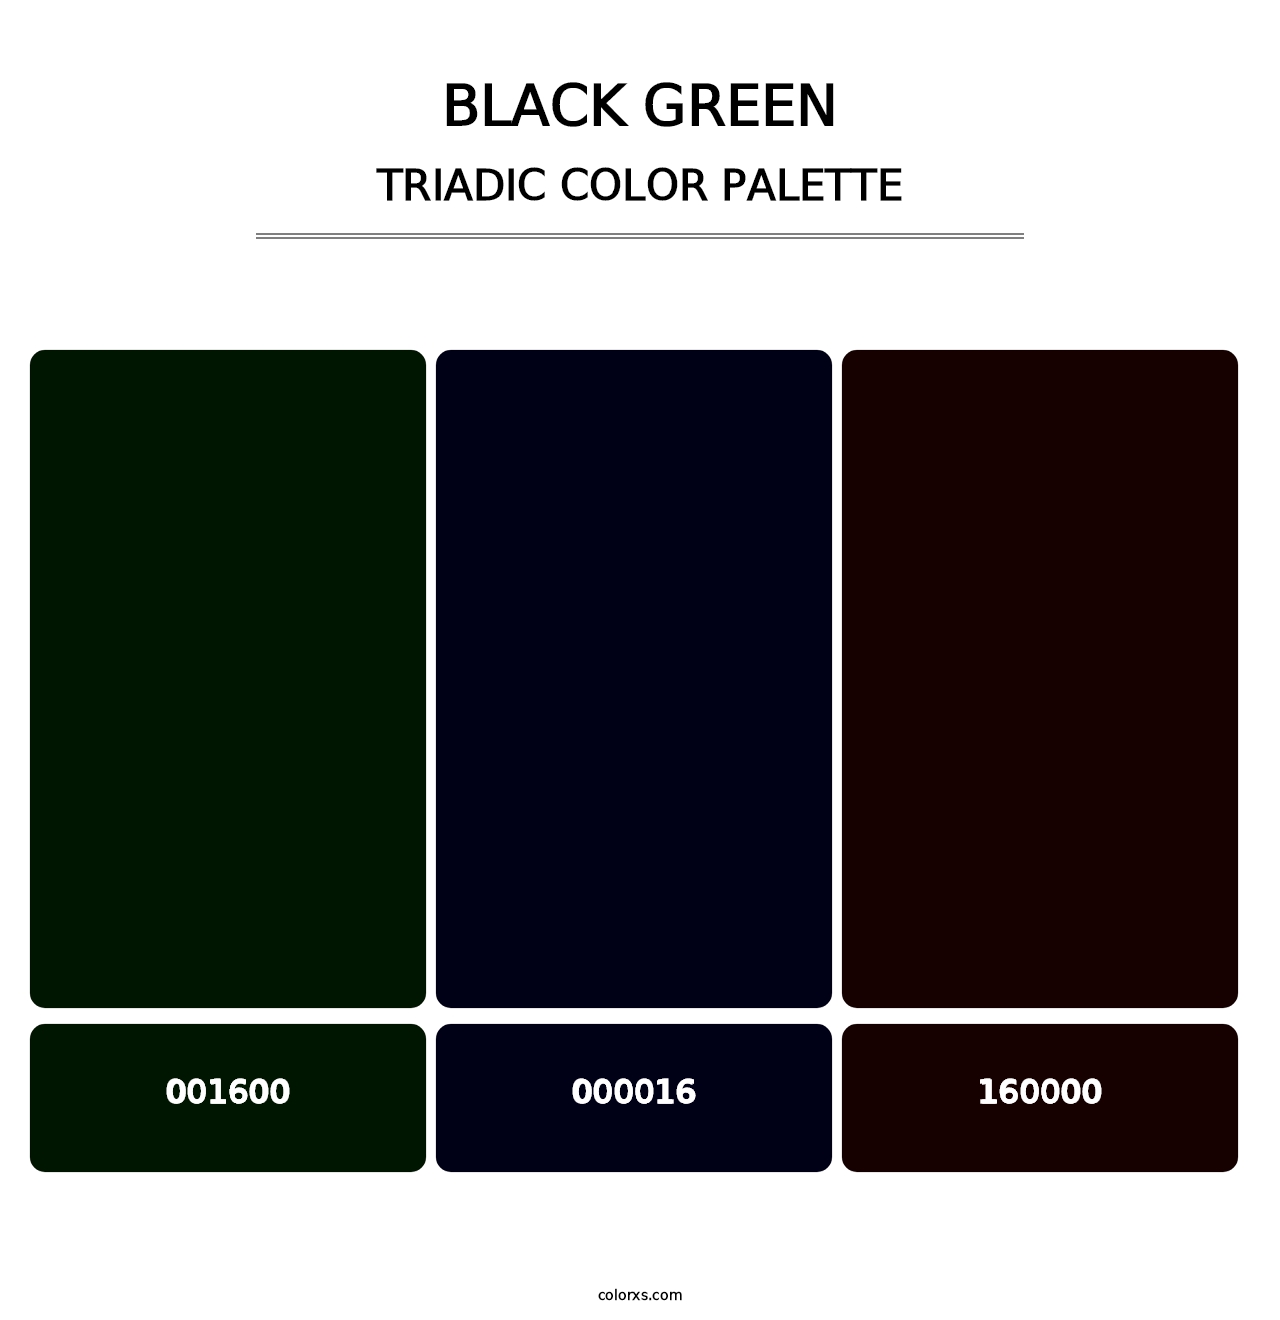 Black Green - Triadic Color Palette